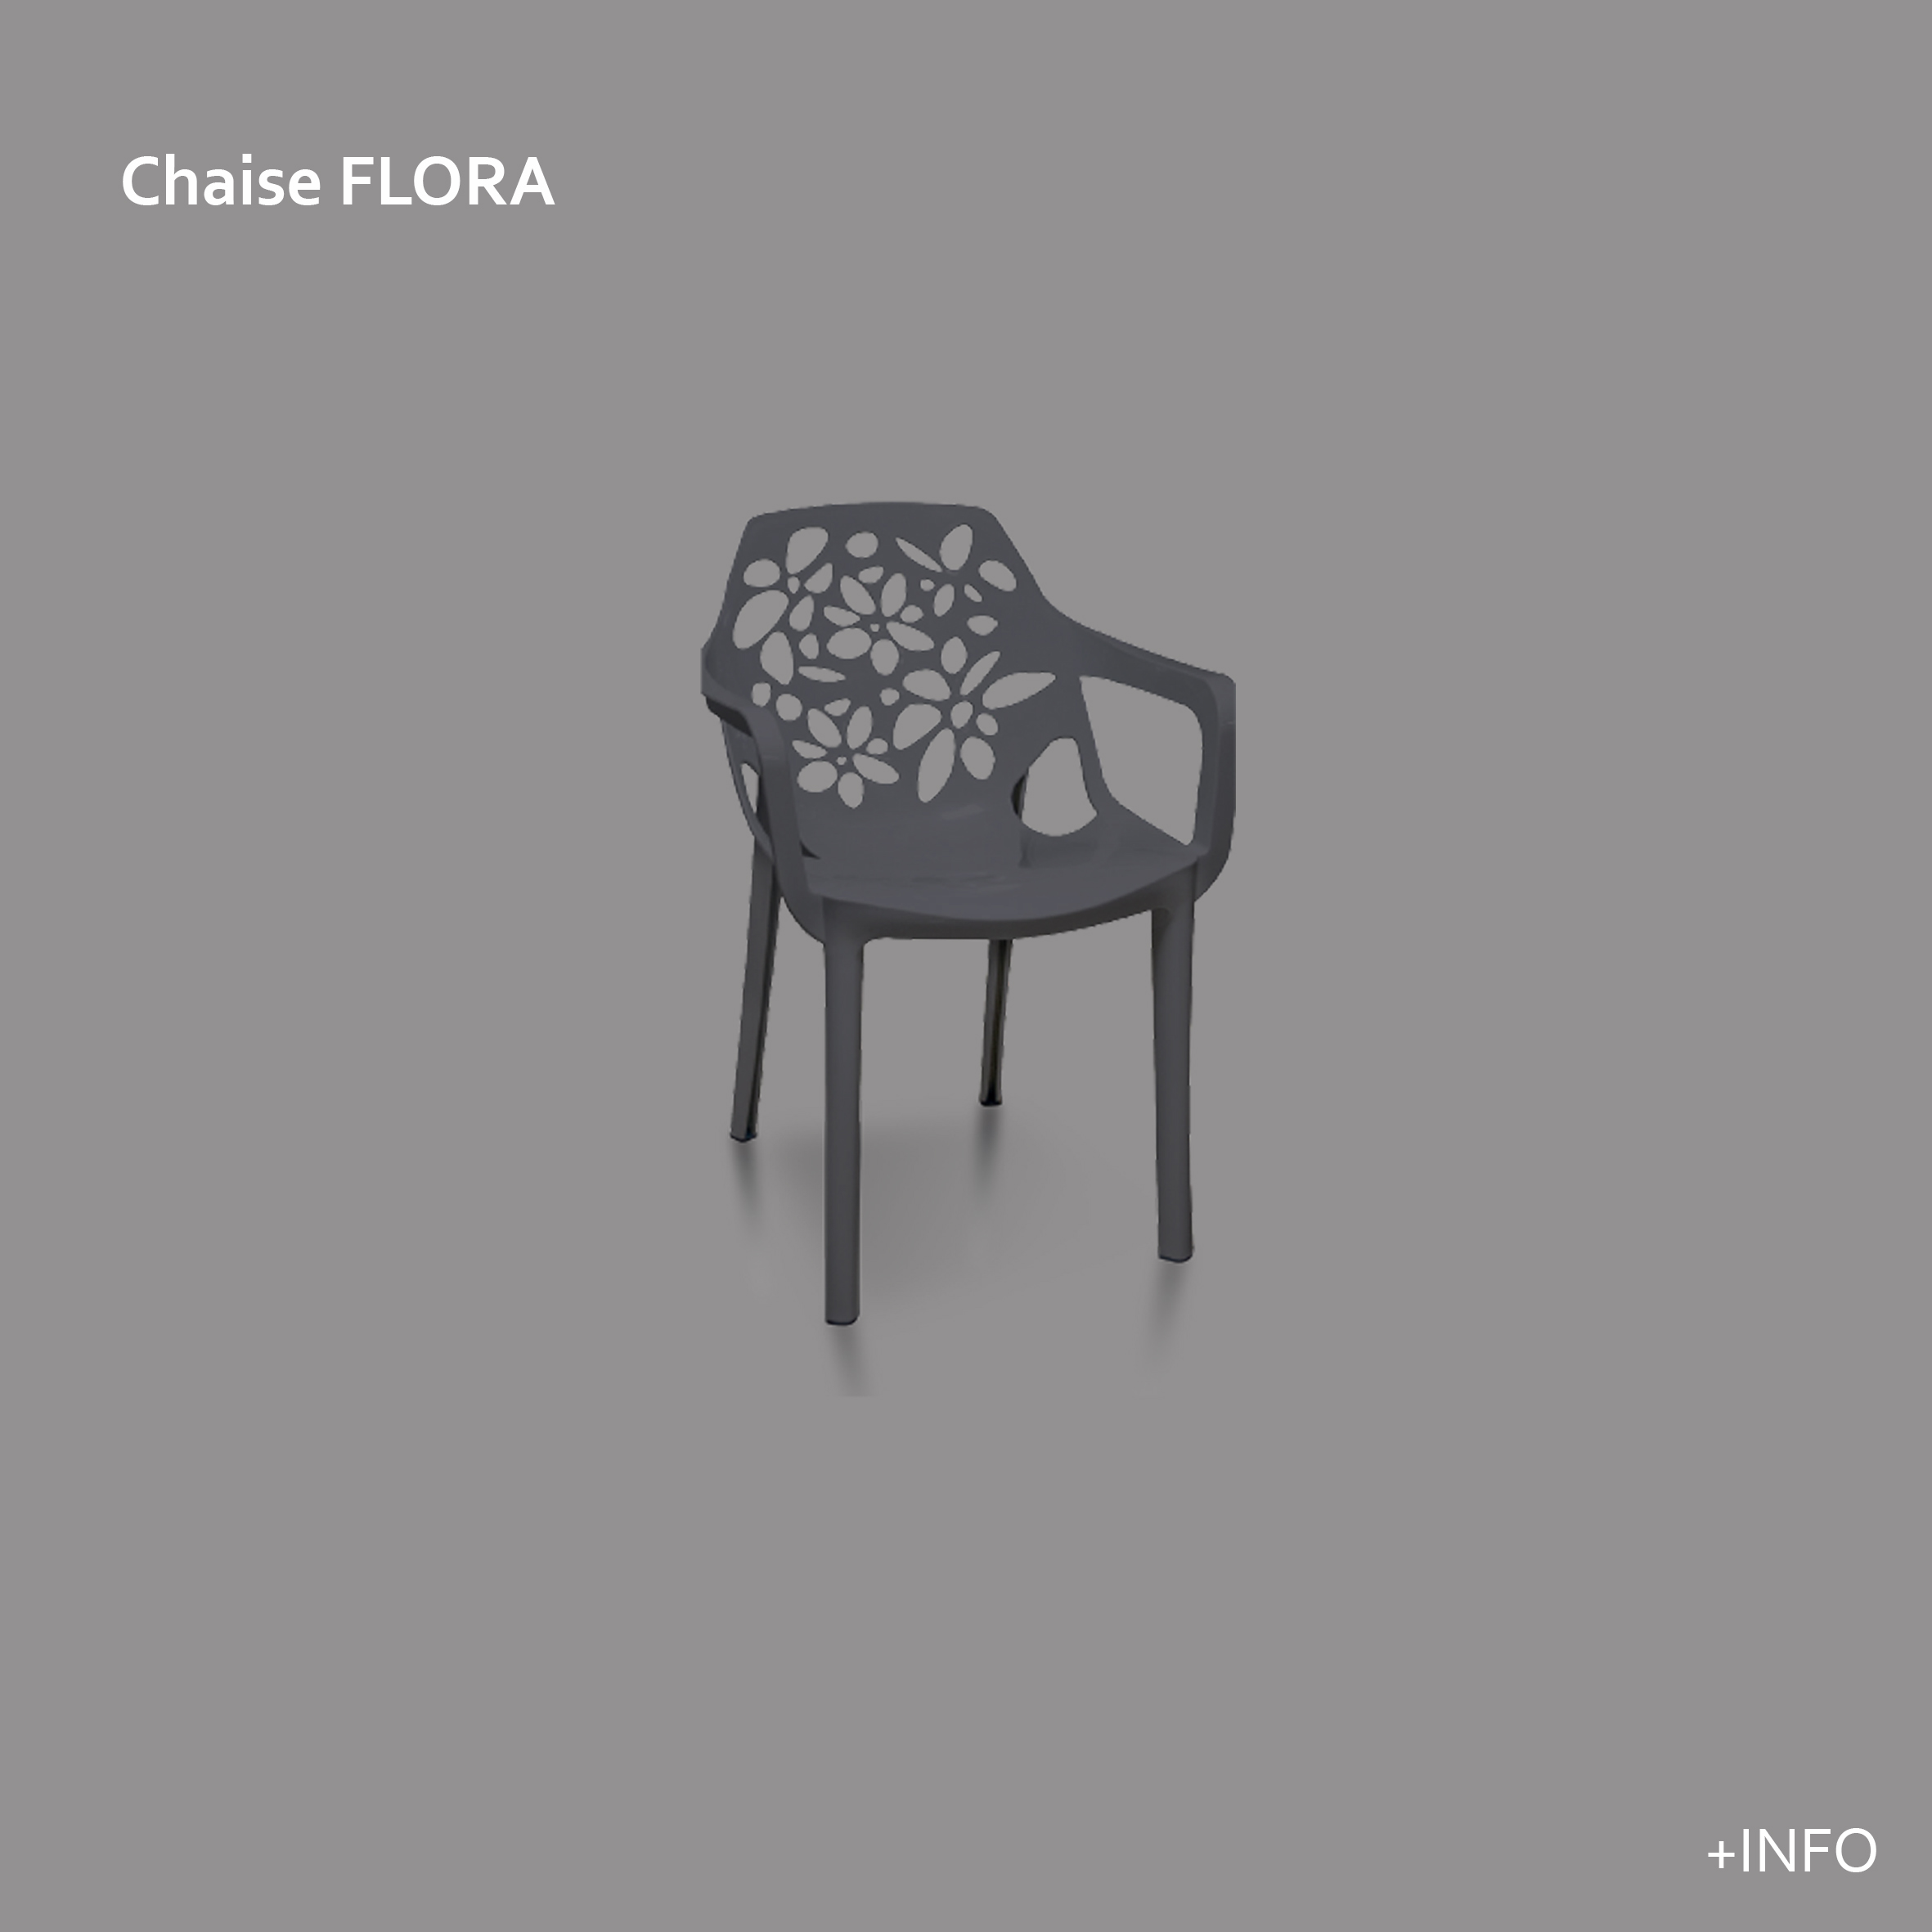 Flora chaise